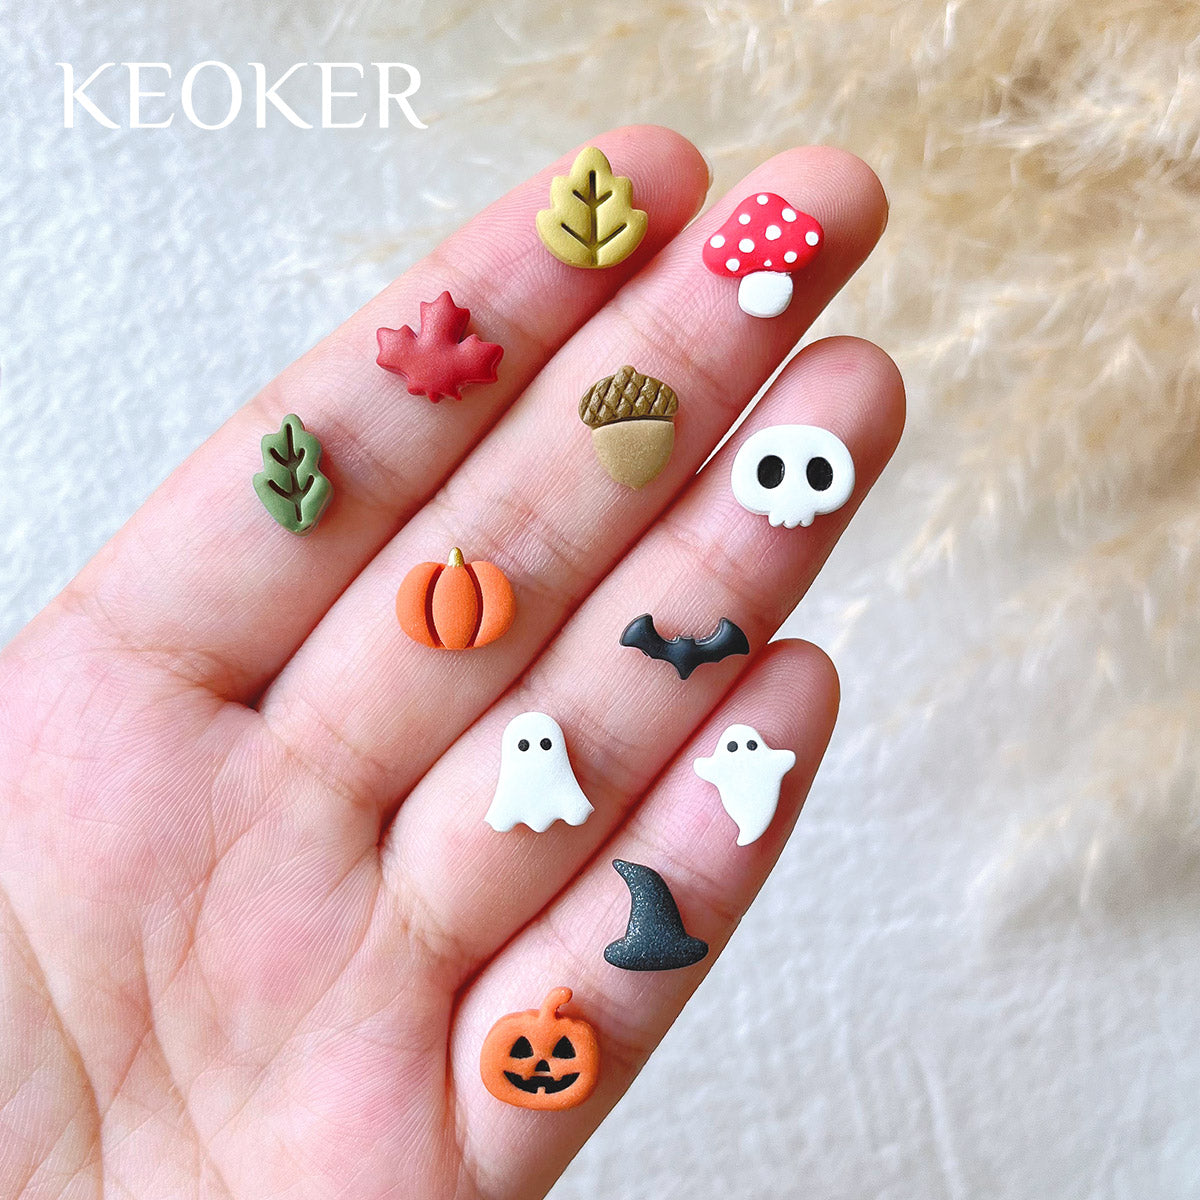 Keoker Polymer Clay Texture Sheets Halloween, Halloween Clay Texture Mat  for Making Earrings Jewerly, Halloween Polymer Clay Earrings Tools (No. 1-3)